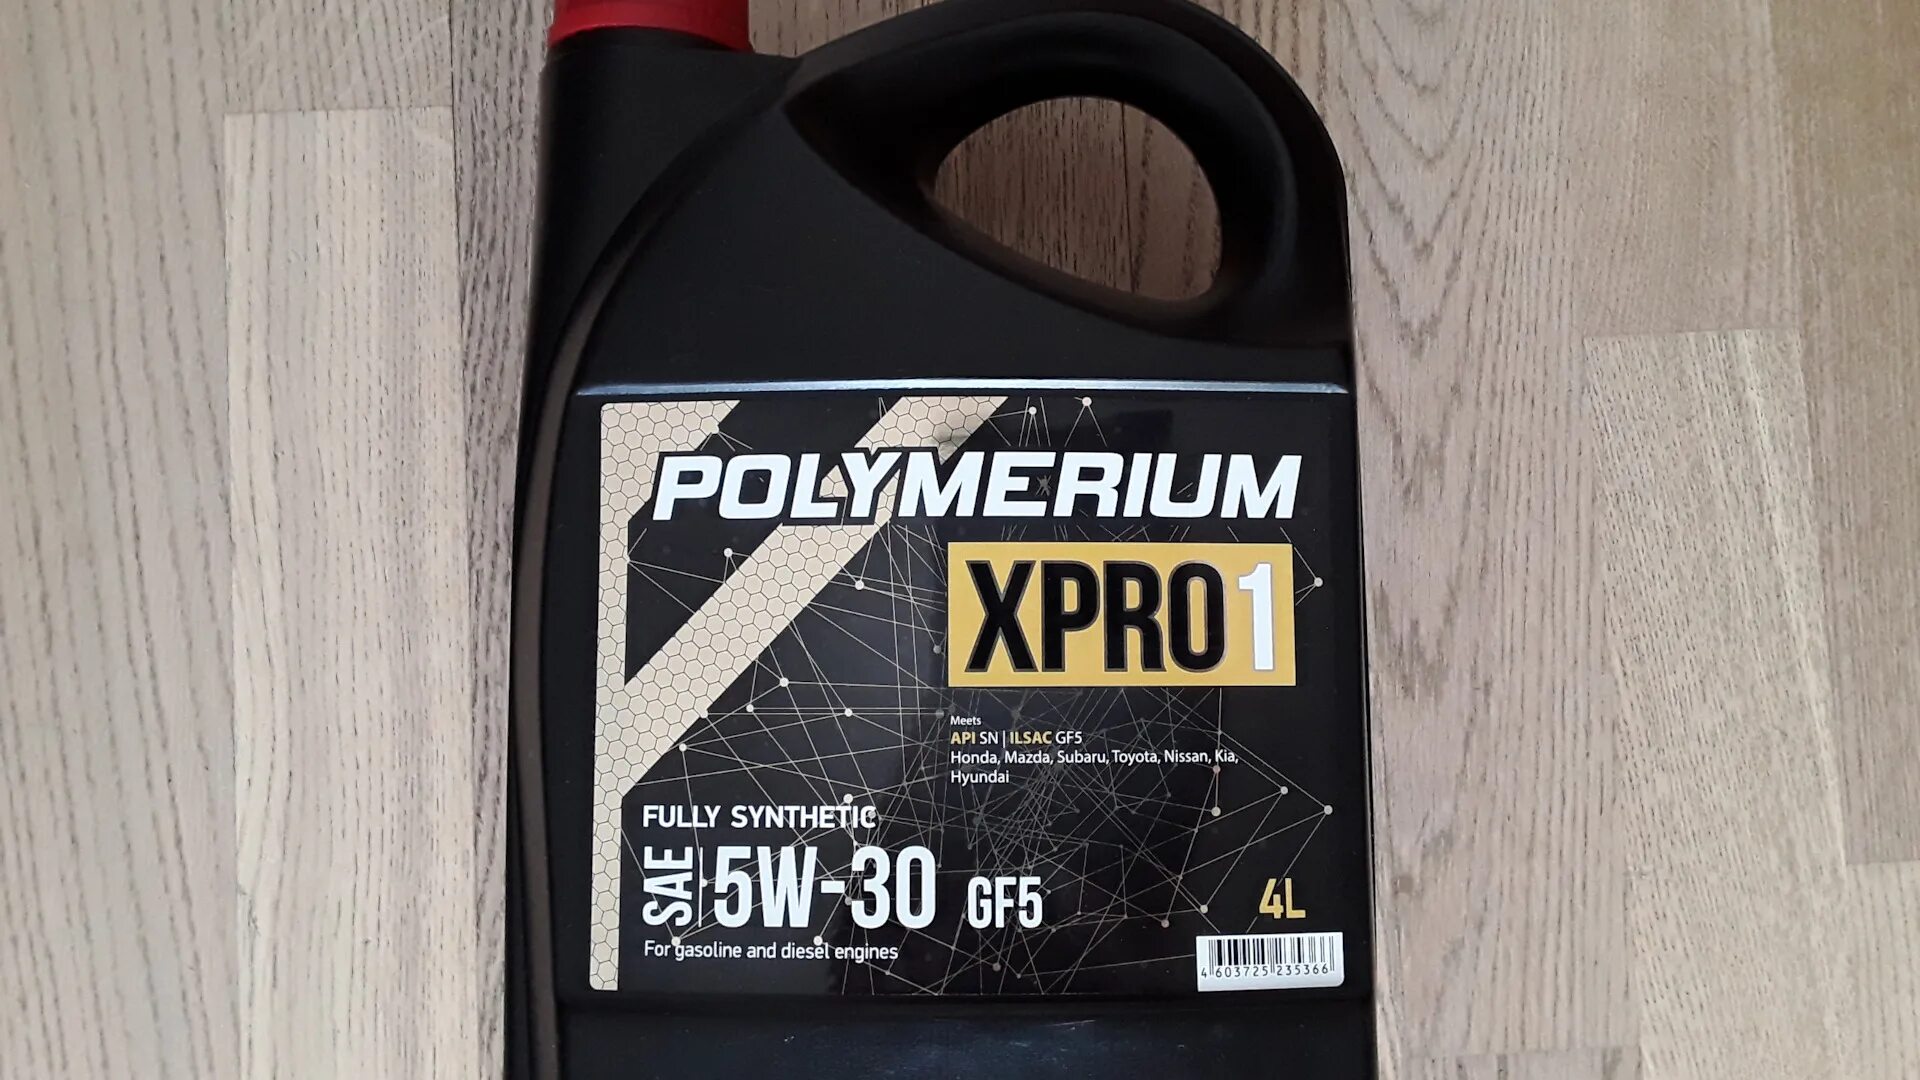 Gf 6a 5w 30. Полимериум 5w30 xpro1. Polymerium xpro2 5w-30 gf5. Polymerium Pro 5w-30 gf5. Масло Polymerium 5w30.